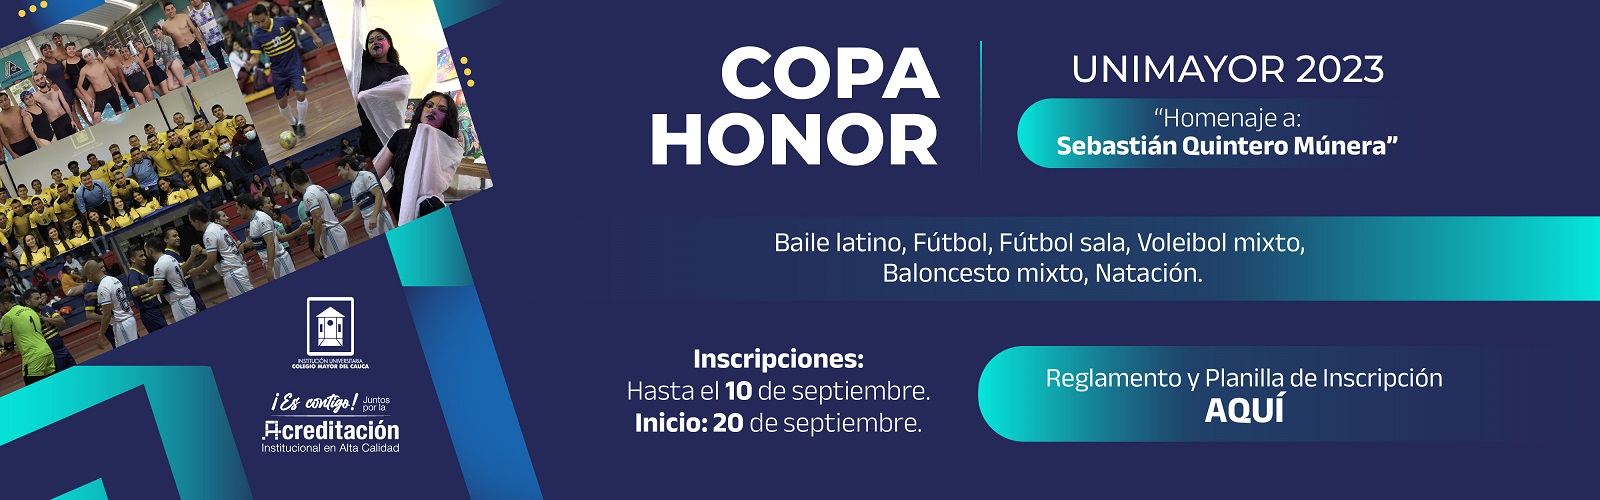 Banner Copa Honor